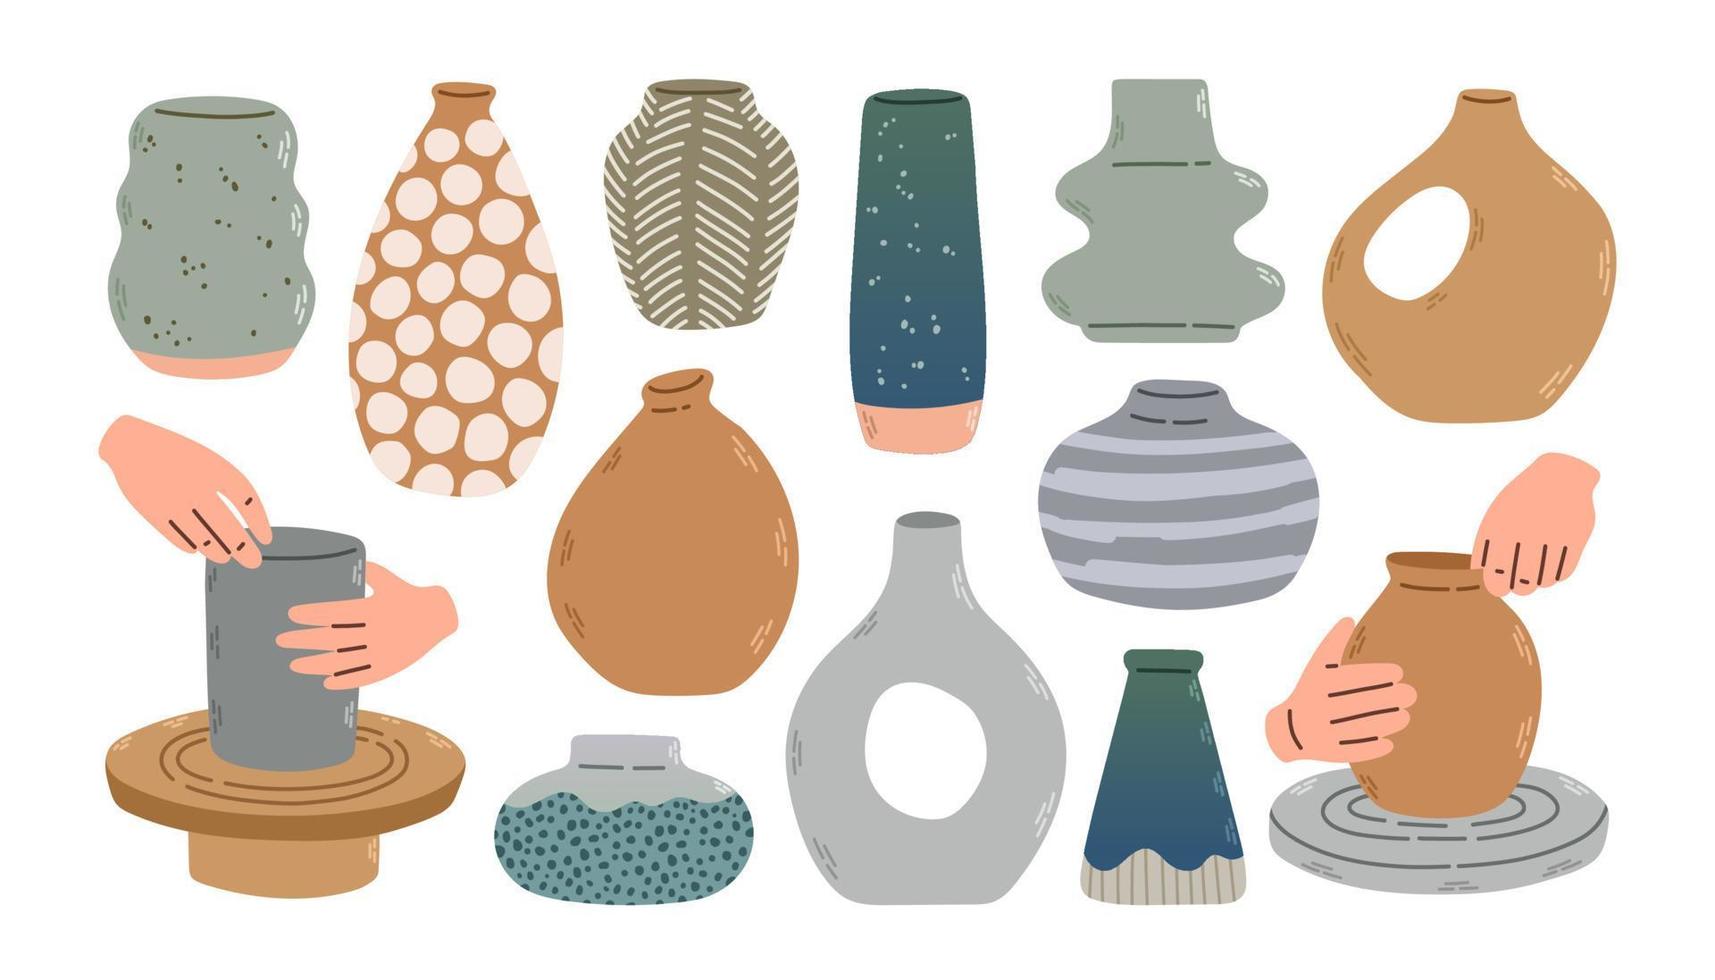 vario ceramica vasi. diverso forme. ceramica officina, ceramica ruota. mano disegnato vettore impostare. di moda illustrazione.